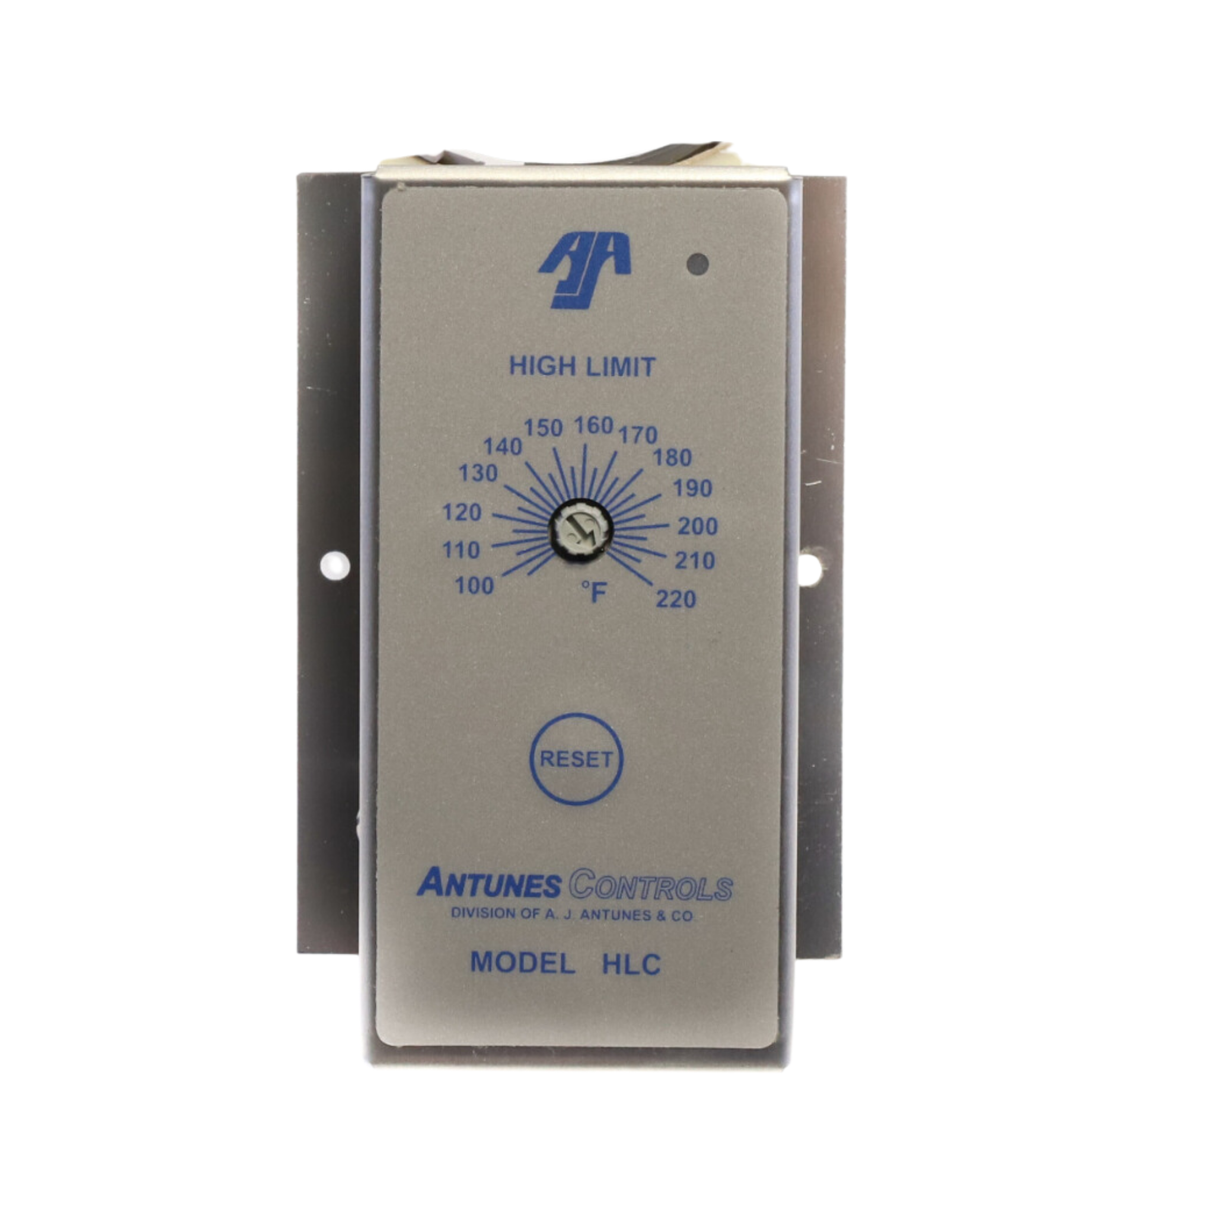 A.J. Antunes 8512130013 24VAC, Manual-Reset, High Limit Control with 15' Sensor